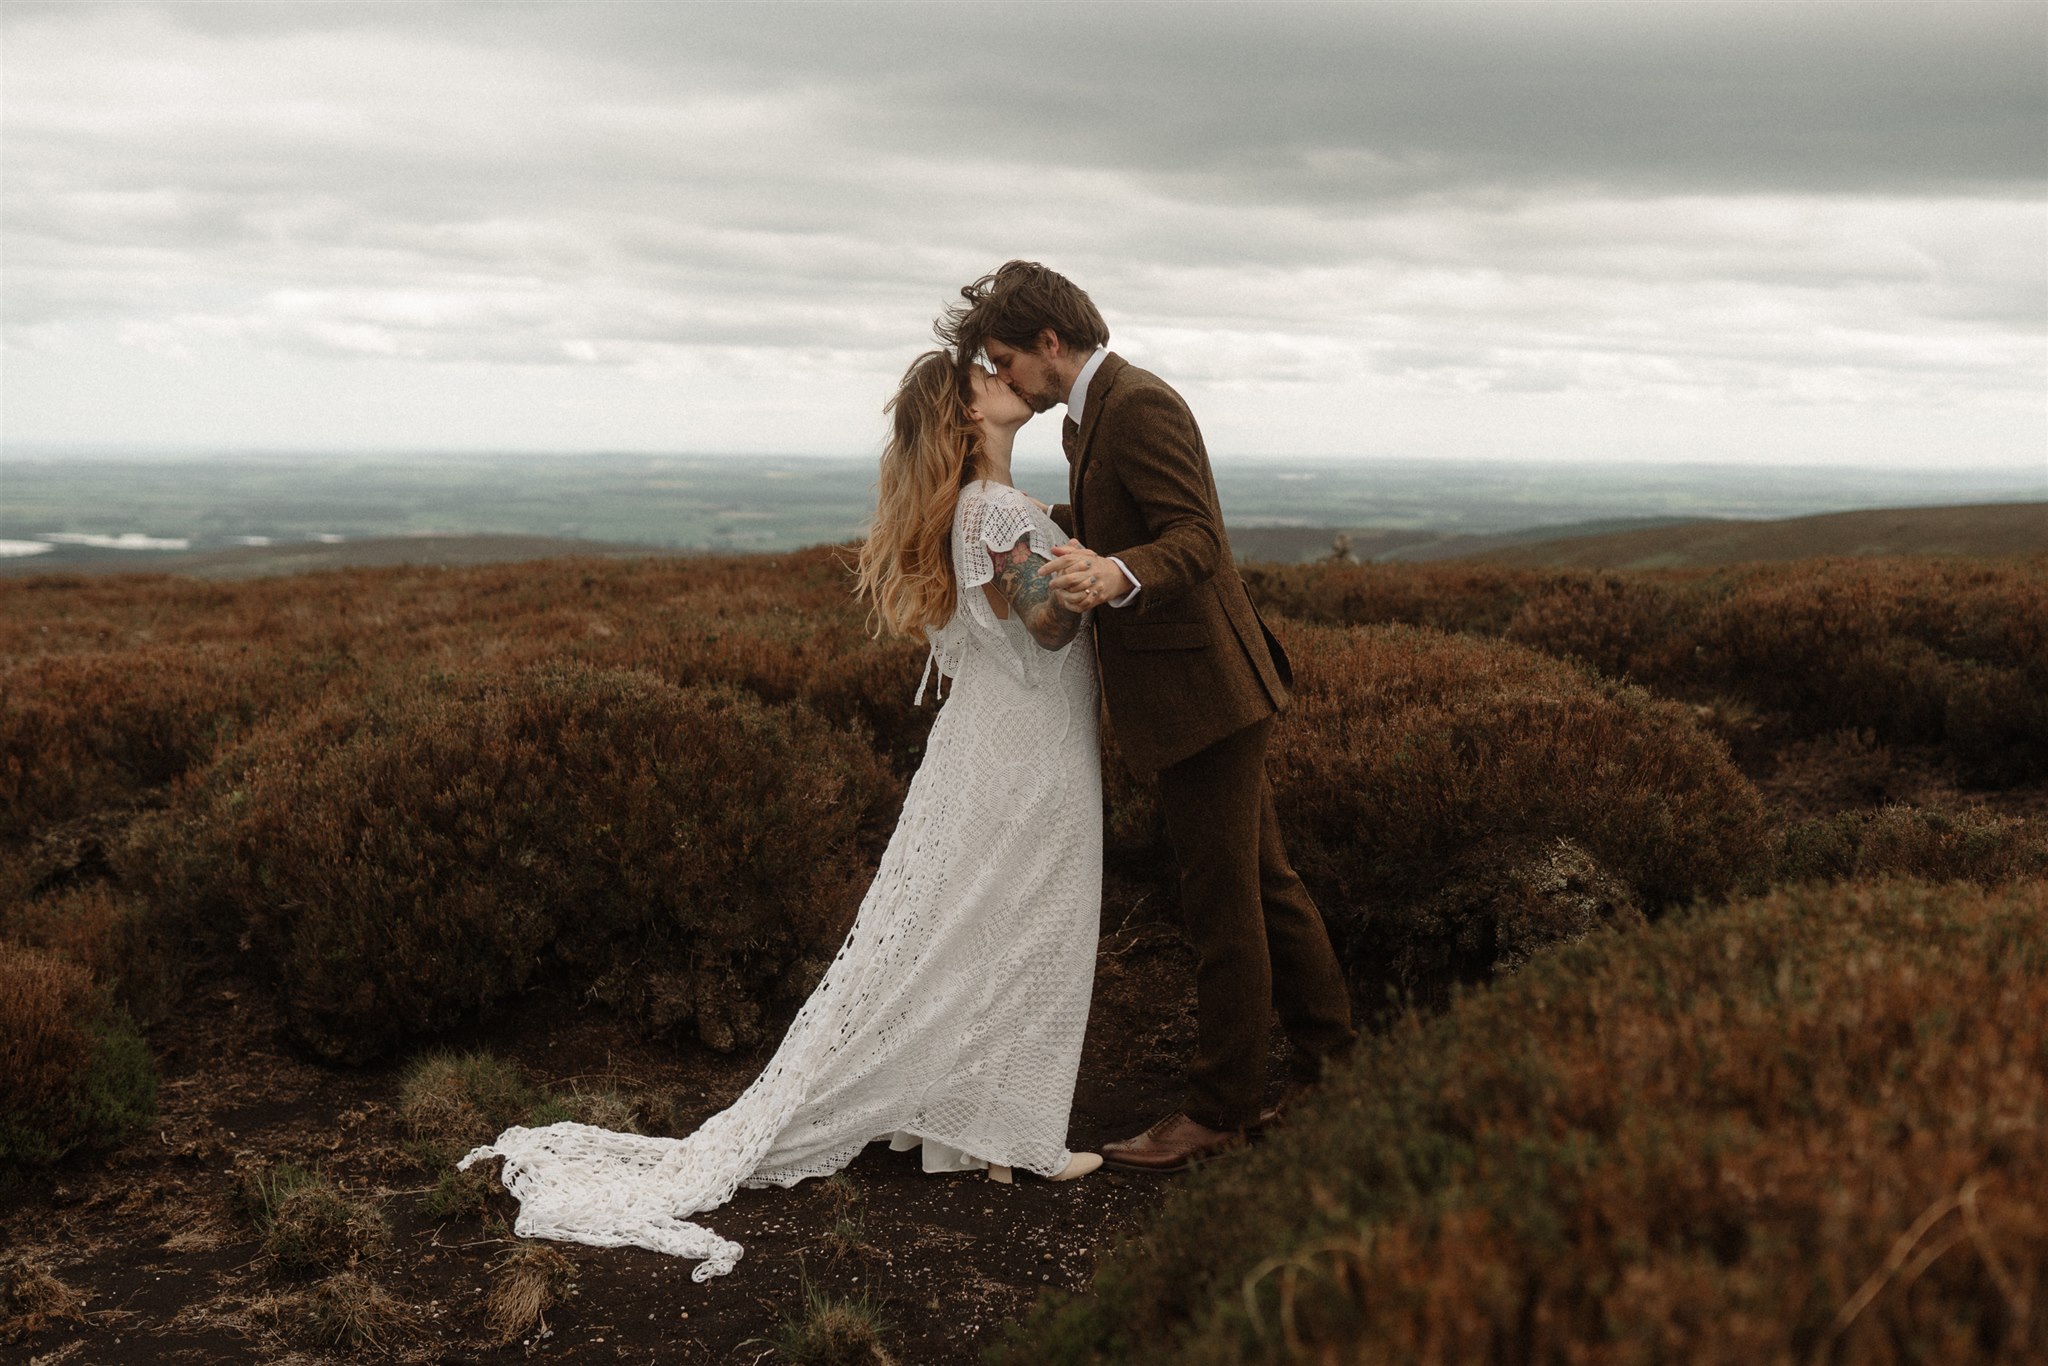 fleetwood mac inspired wedding - scottish highlands wedding photos - bohemian wedding ideas - artistic wedding photography